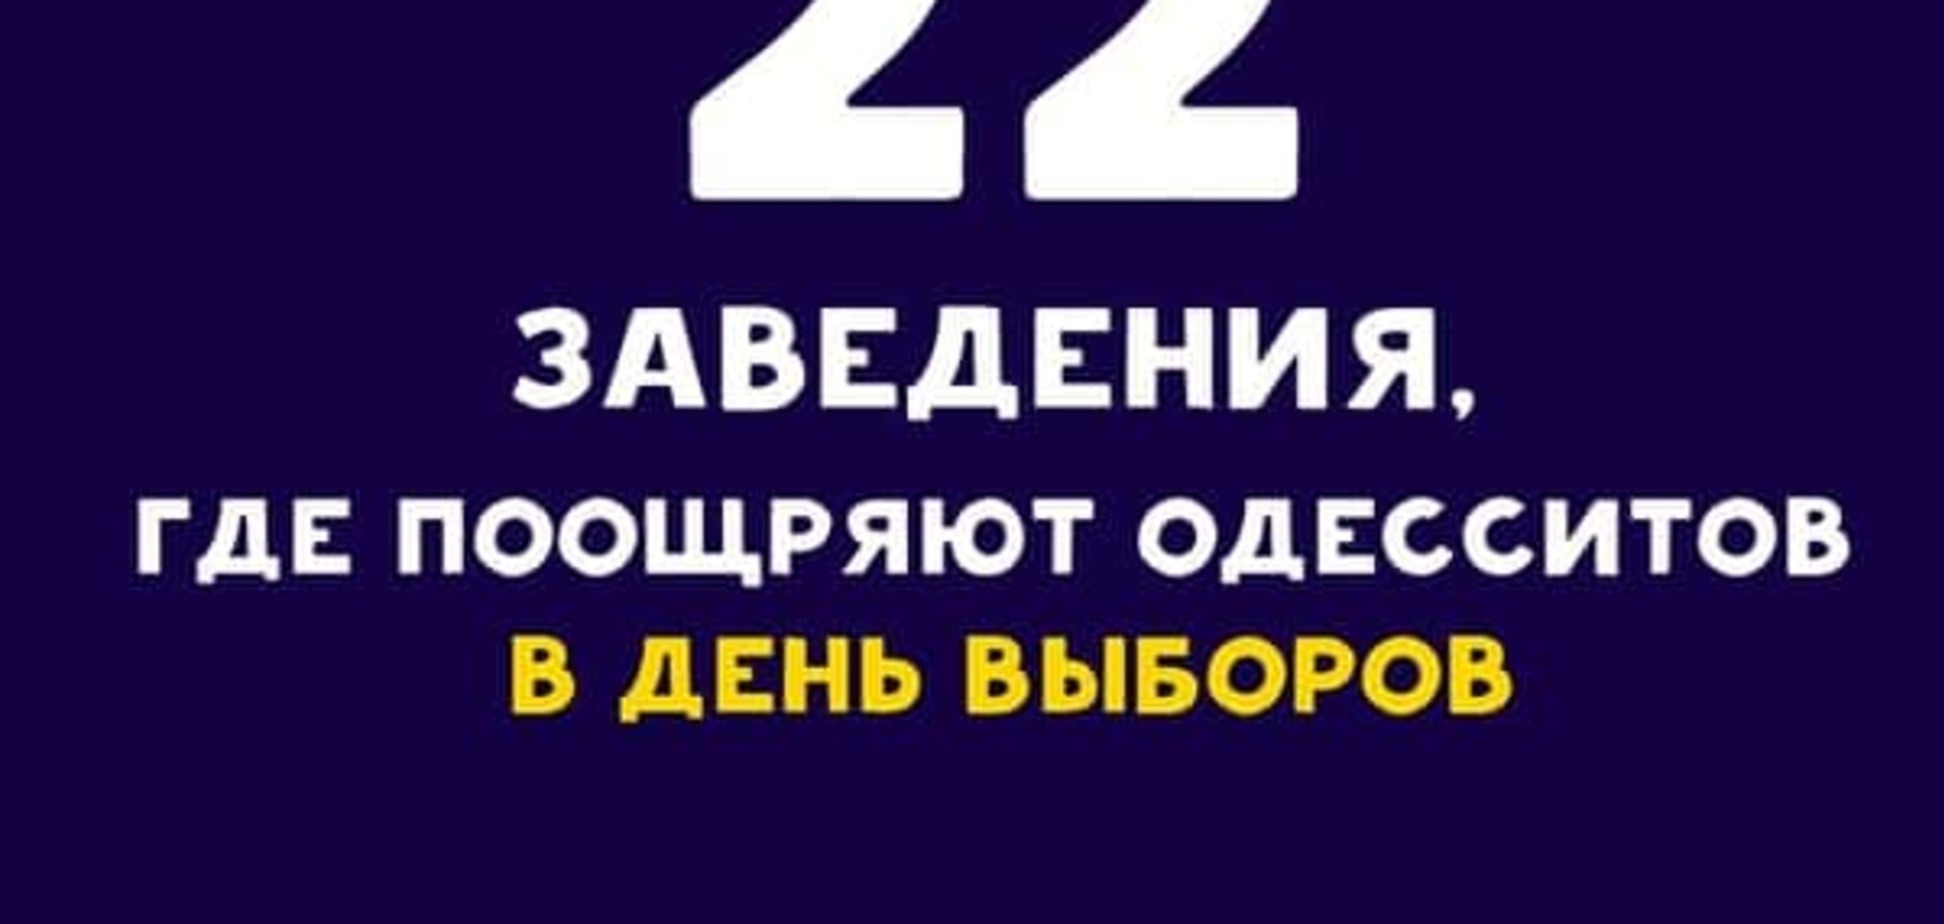 Одесса голосует! 22 кафе пообещали скидки за селфи на избирательном участке